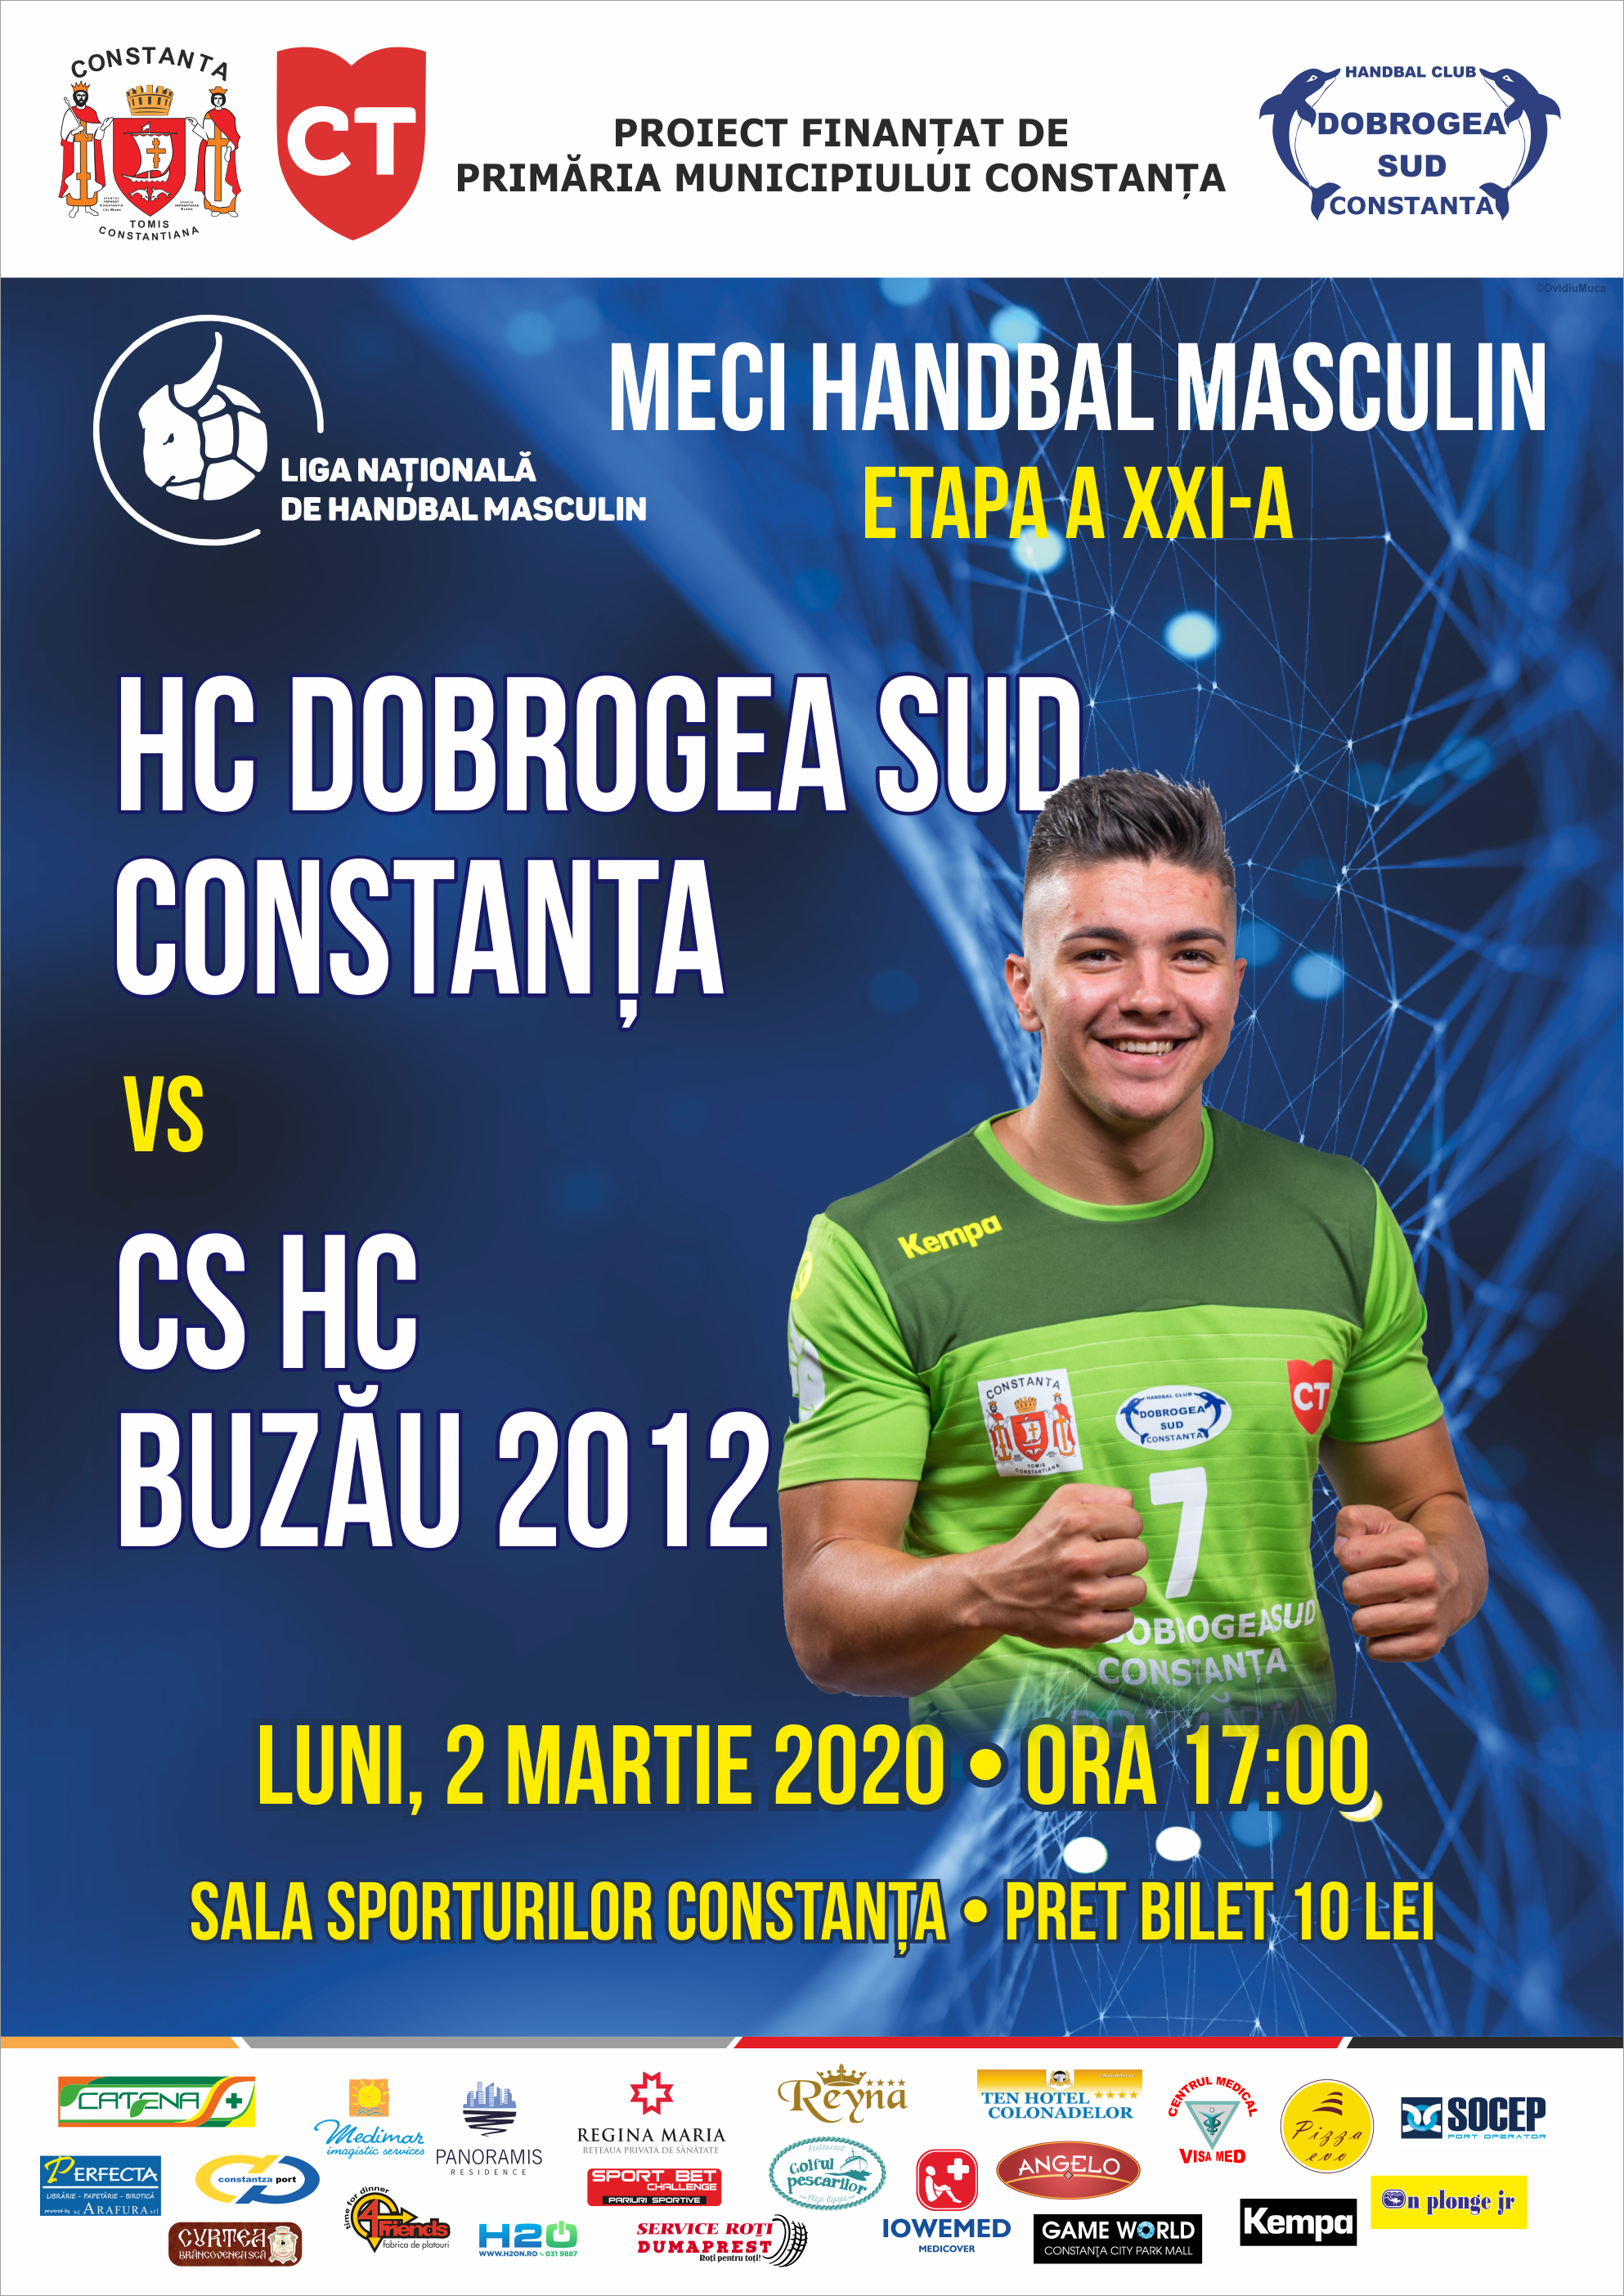 HC Dobrogea Sud Constanta vs CS HC Buzau 2012 02.03.2020